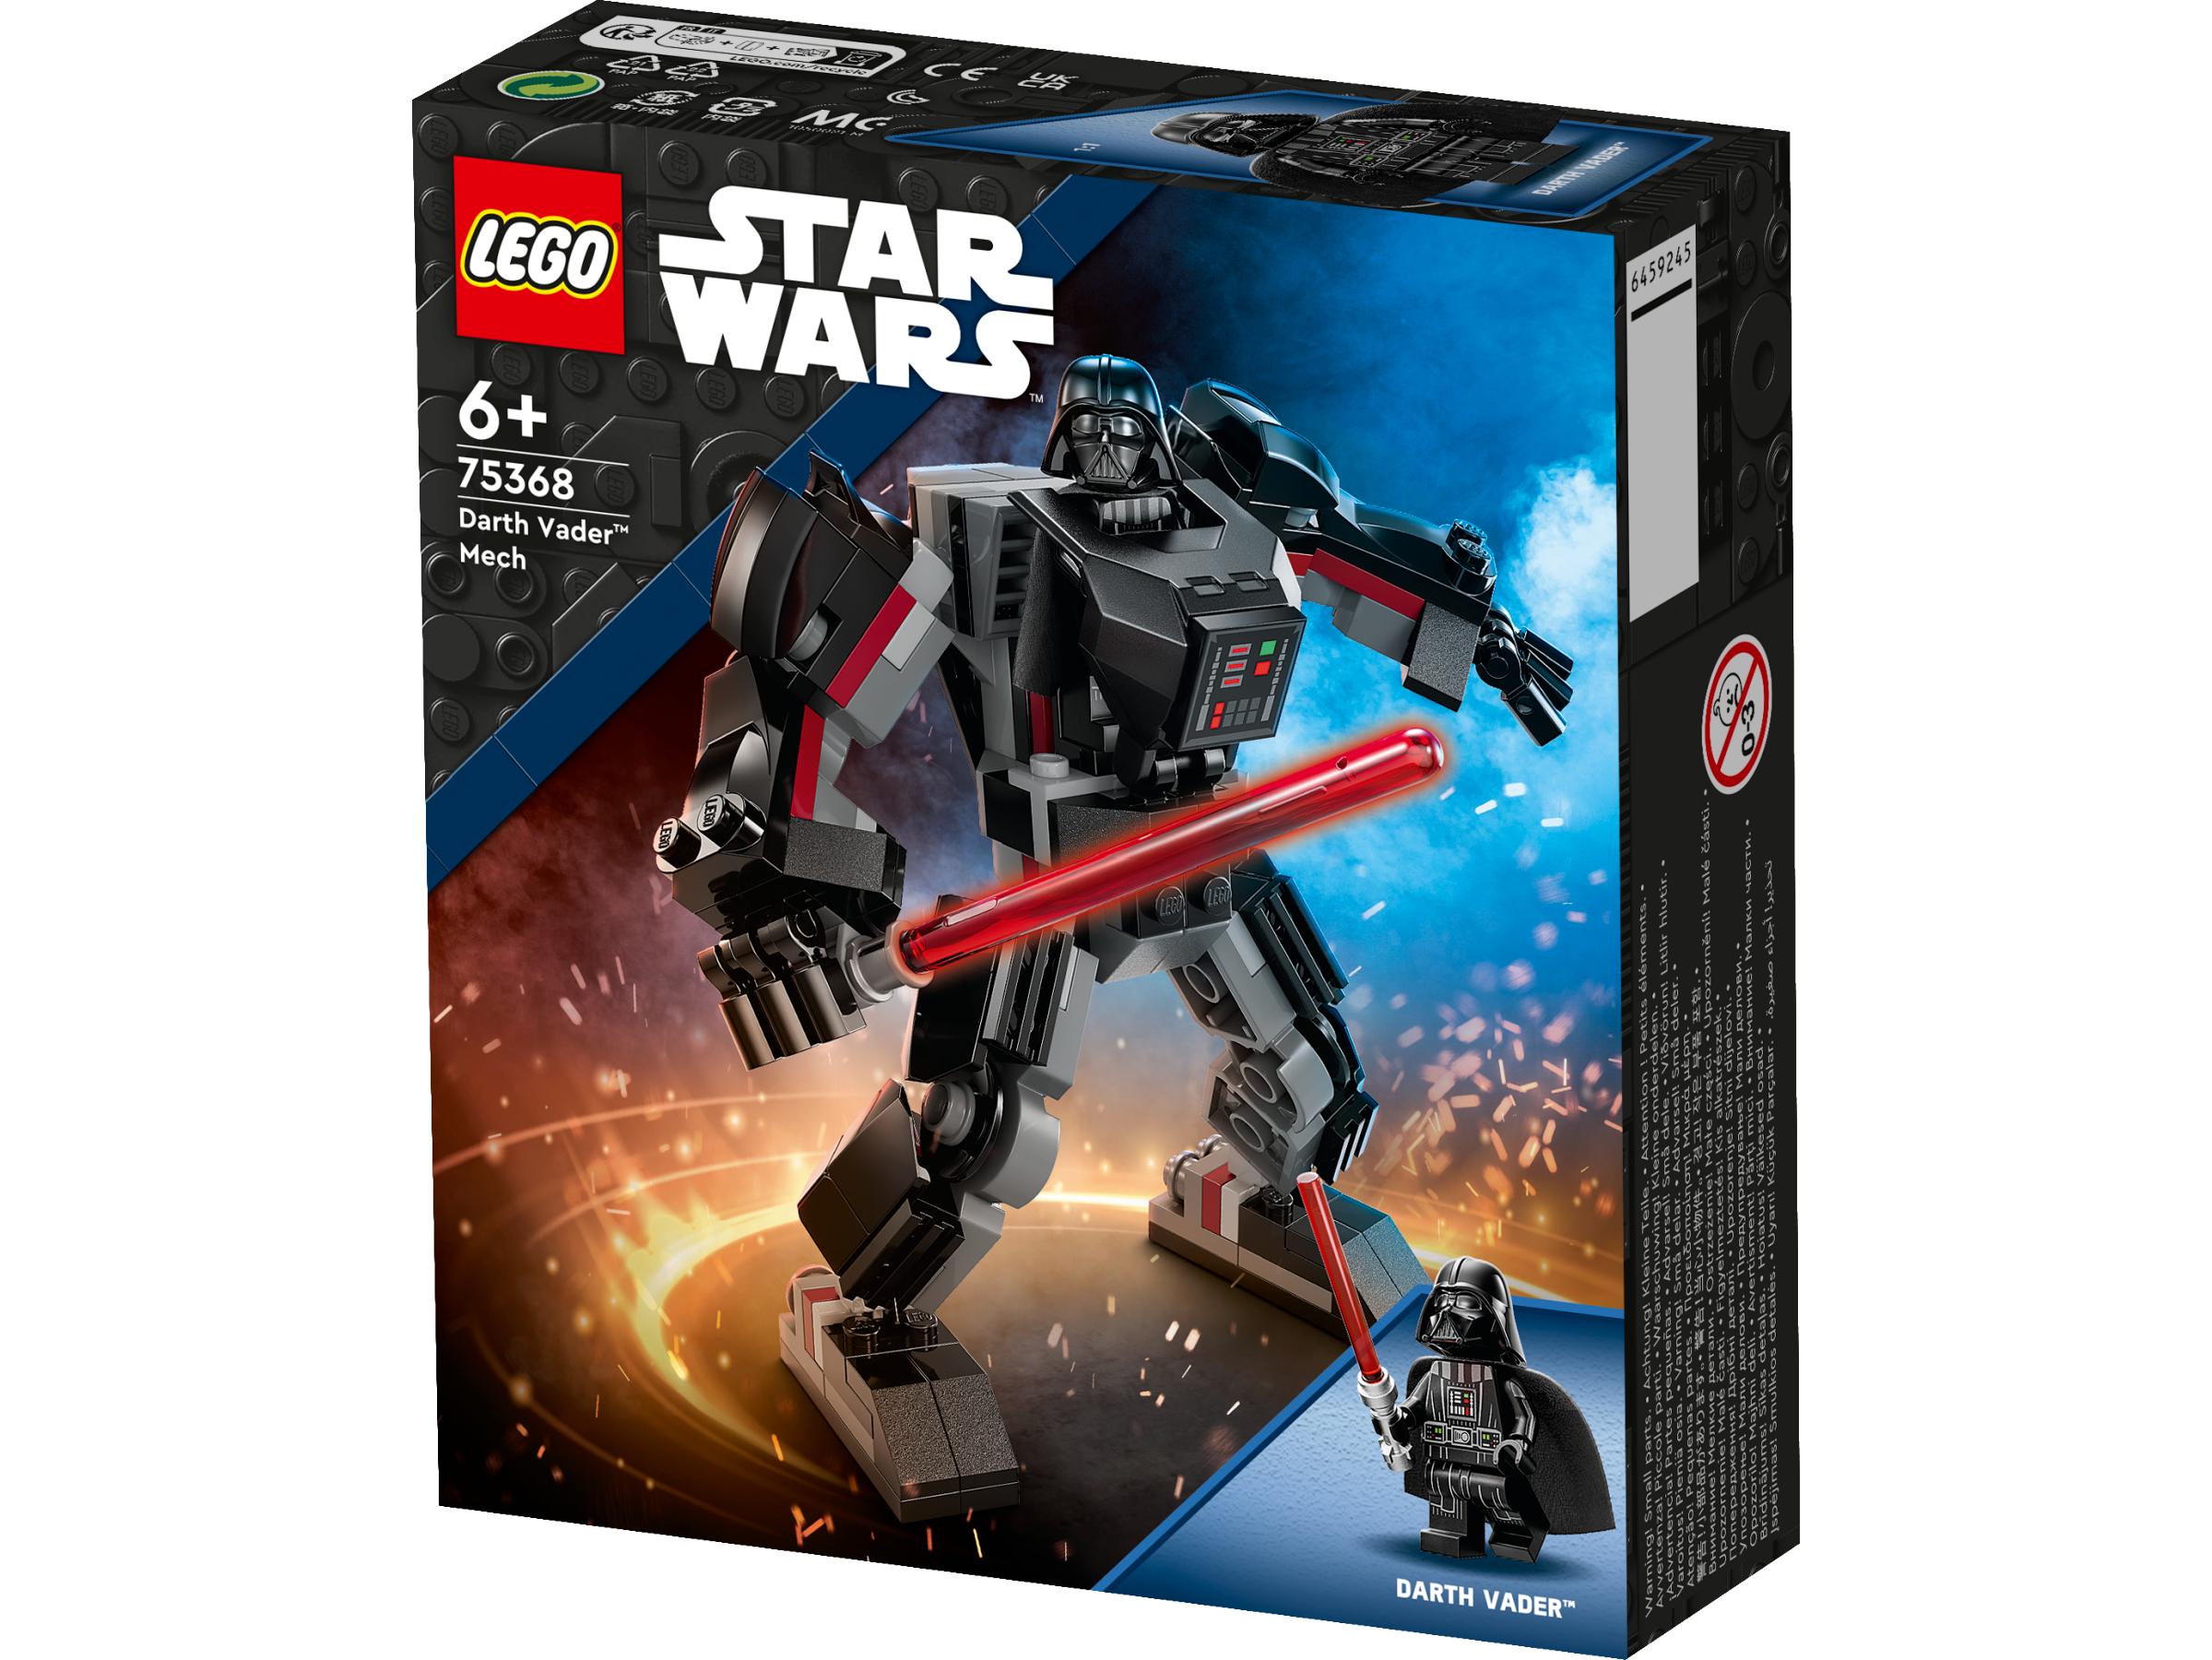 Lego 75368 Darth Vader Mech Playset